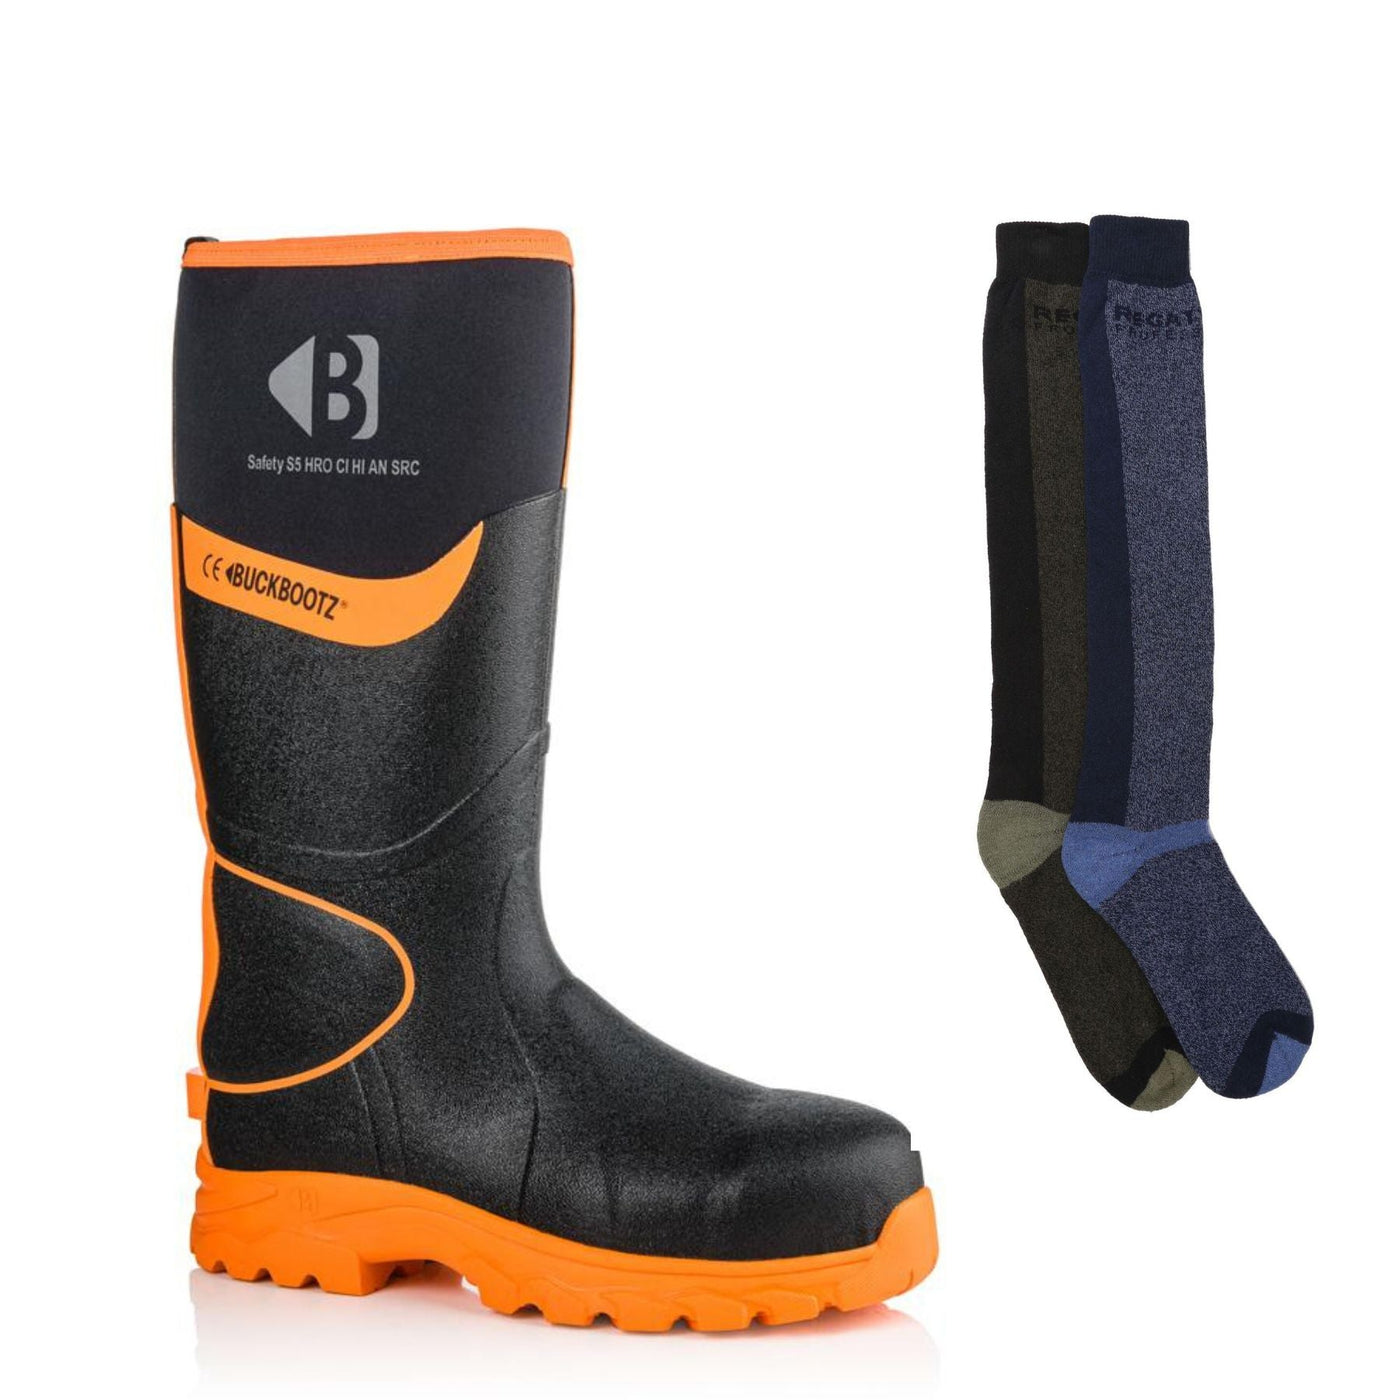 Buckbootz BBZ8000 Special Offer Pack - Buckler Neoprene Safety Wellington Boots + 2 Pairs Wellies Socks